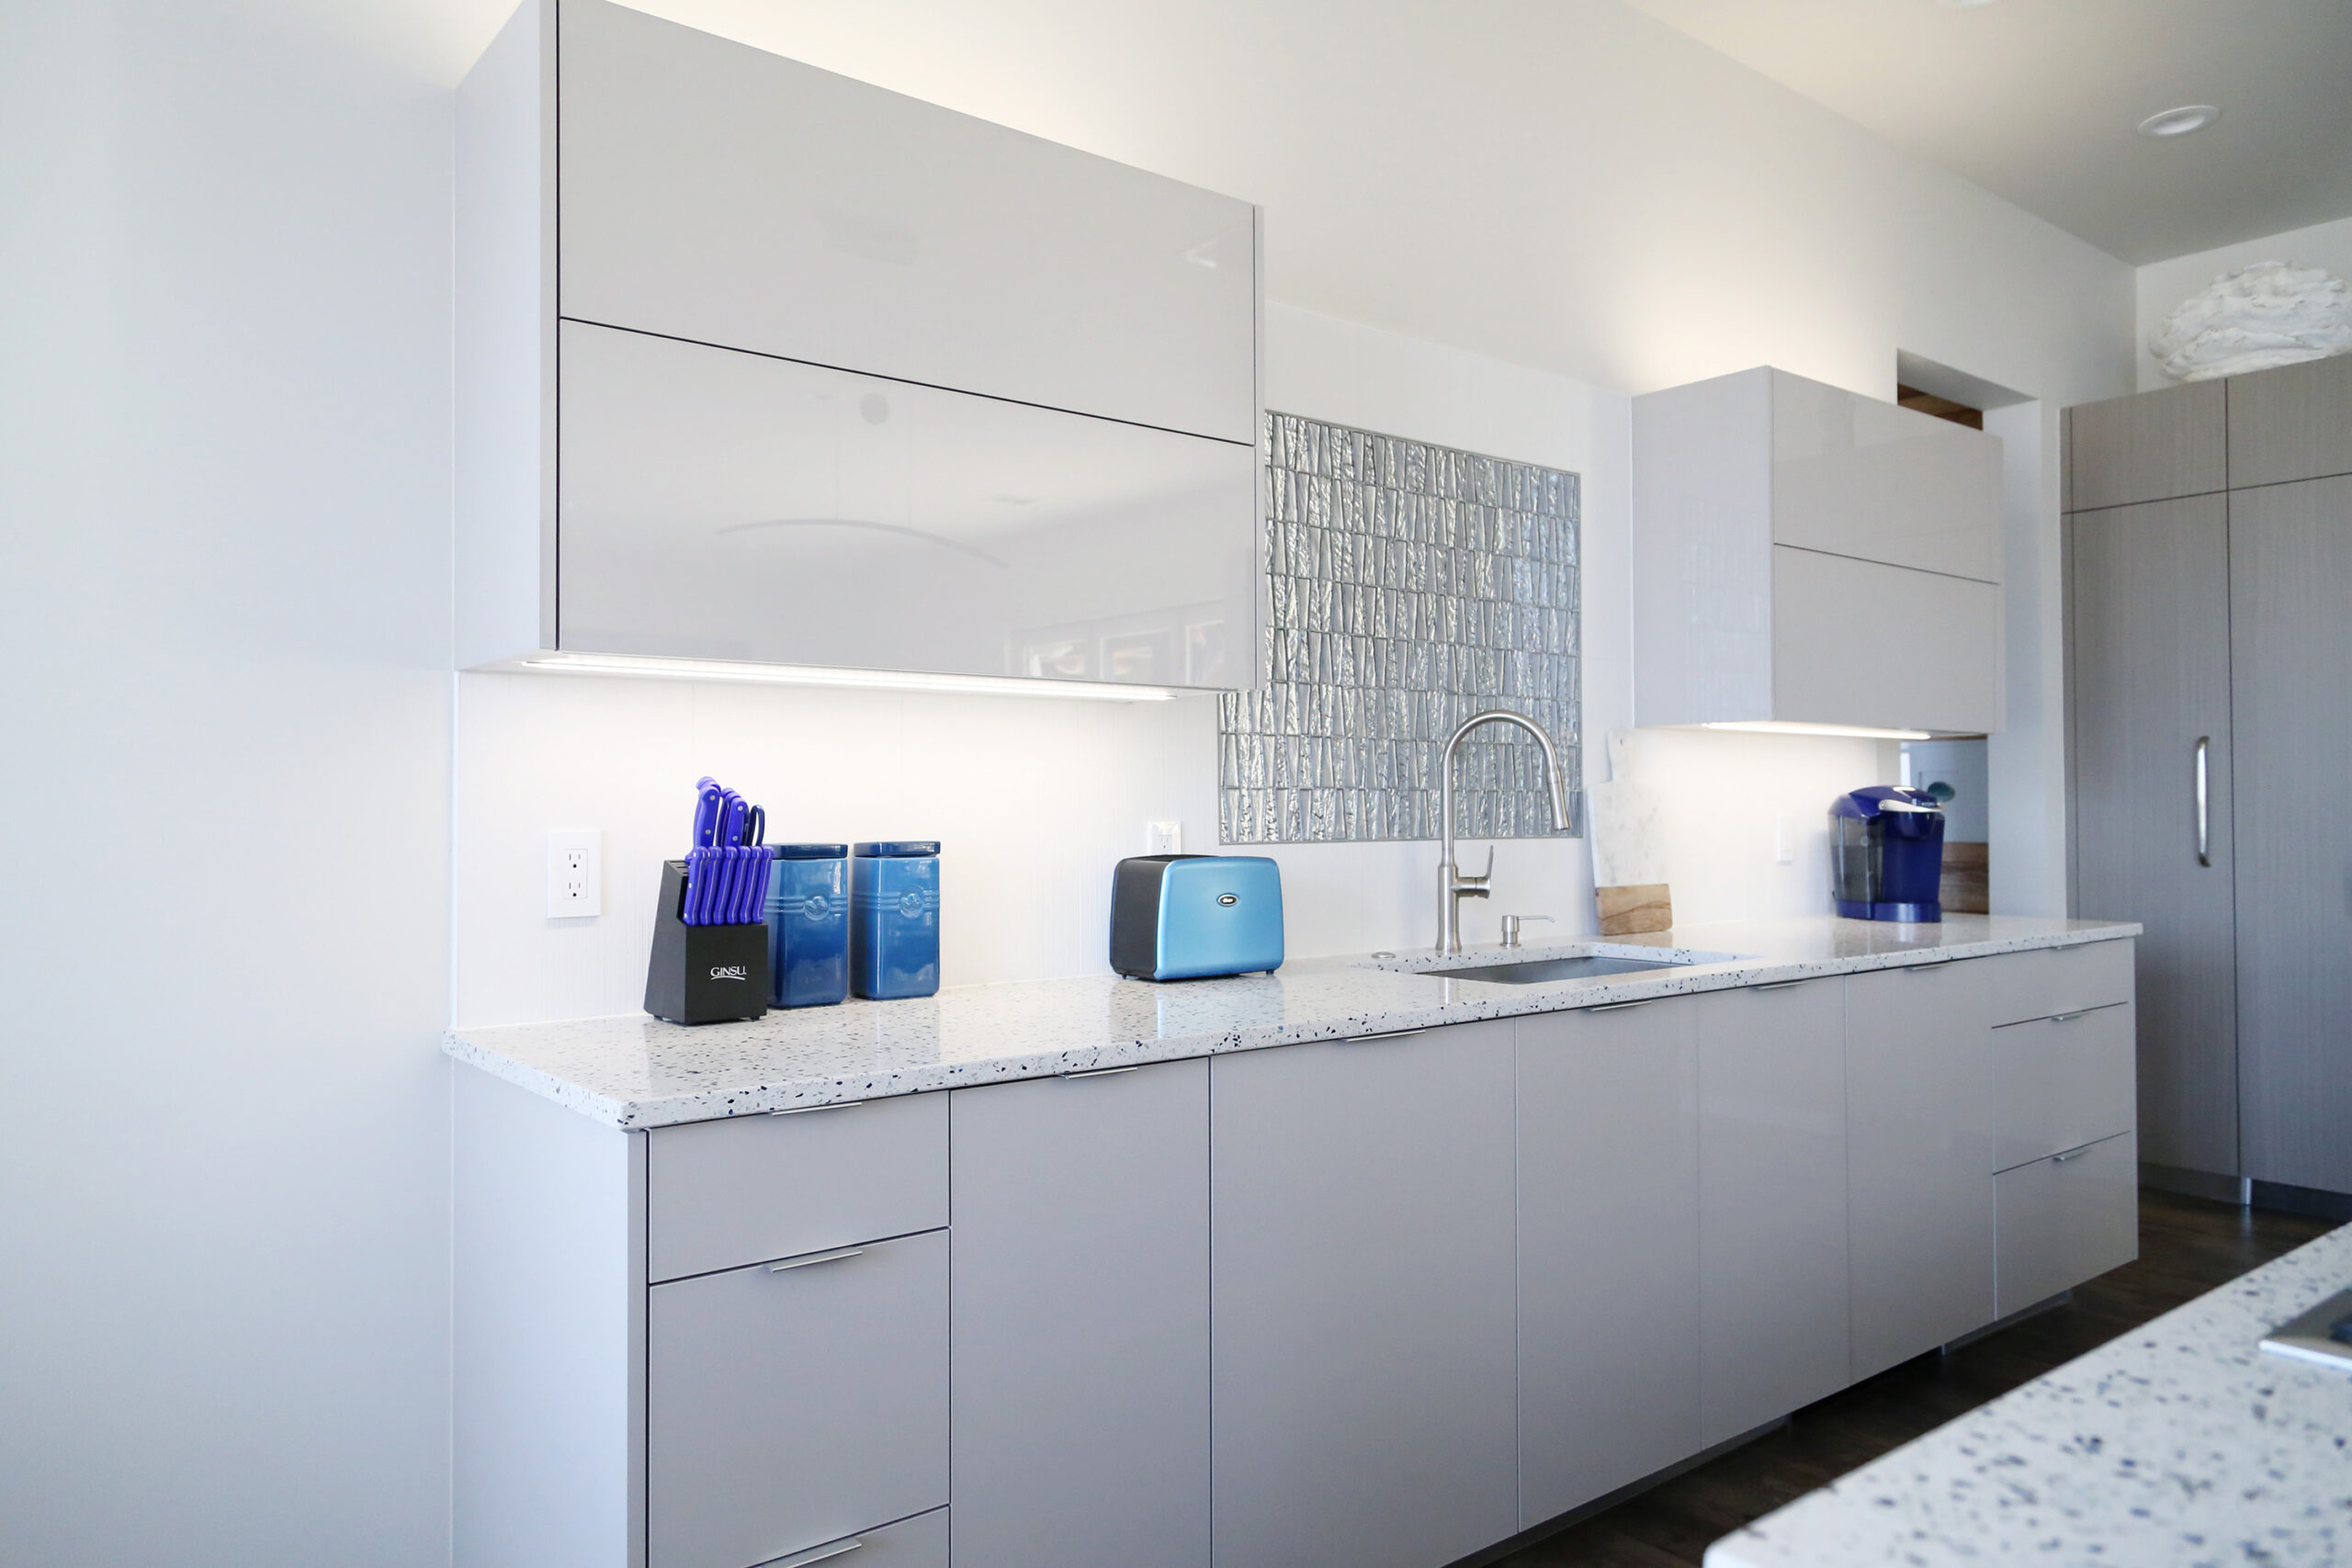 White Laminate Pullup Cabinets White Counters Undermount Kitchen Sink Elite Cabinets Tulsa Kitchen